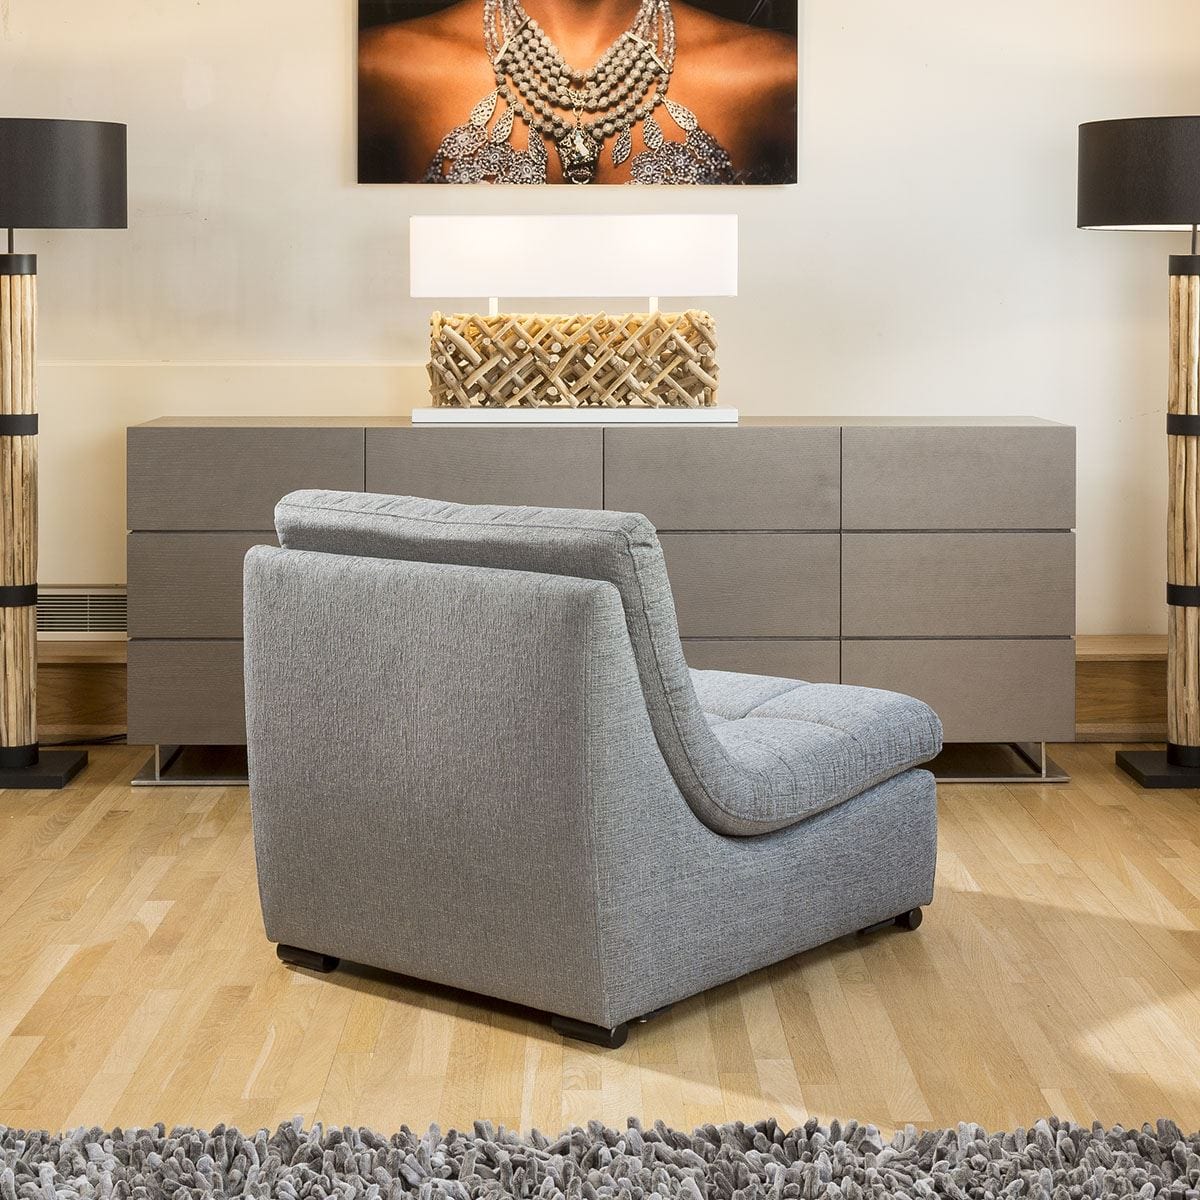 Quatropi Relax Premium Desginer Sofa Middle Piece Single Chair 80cm Wide